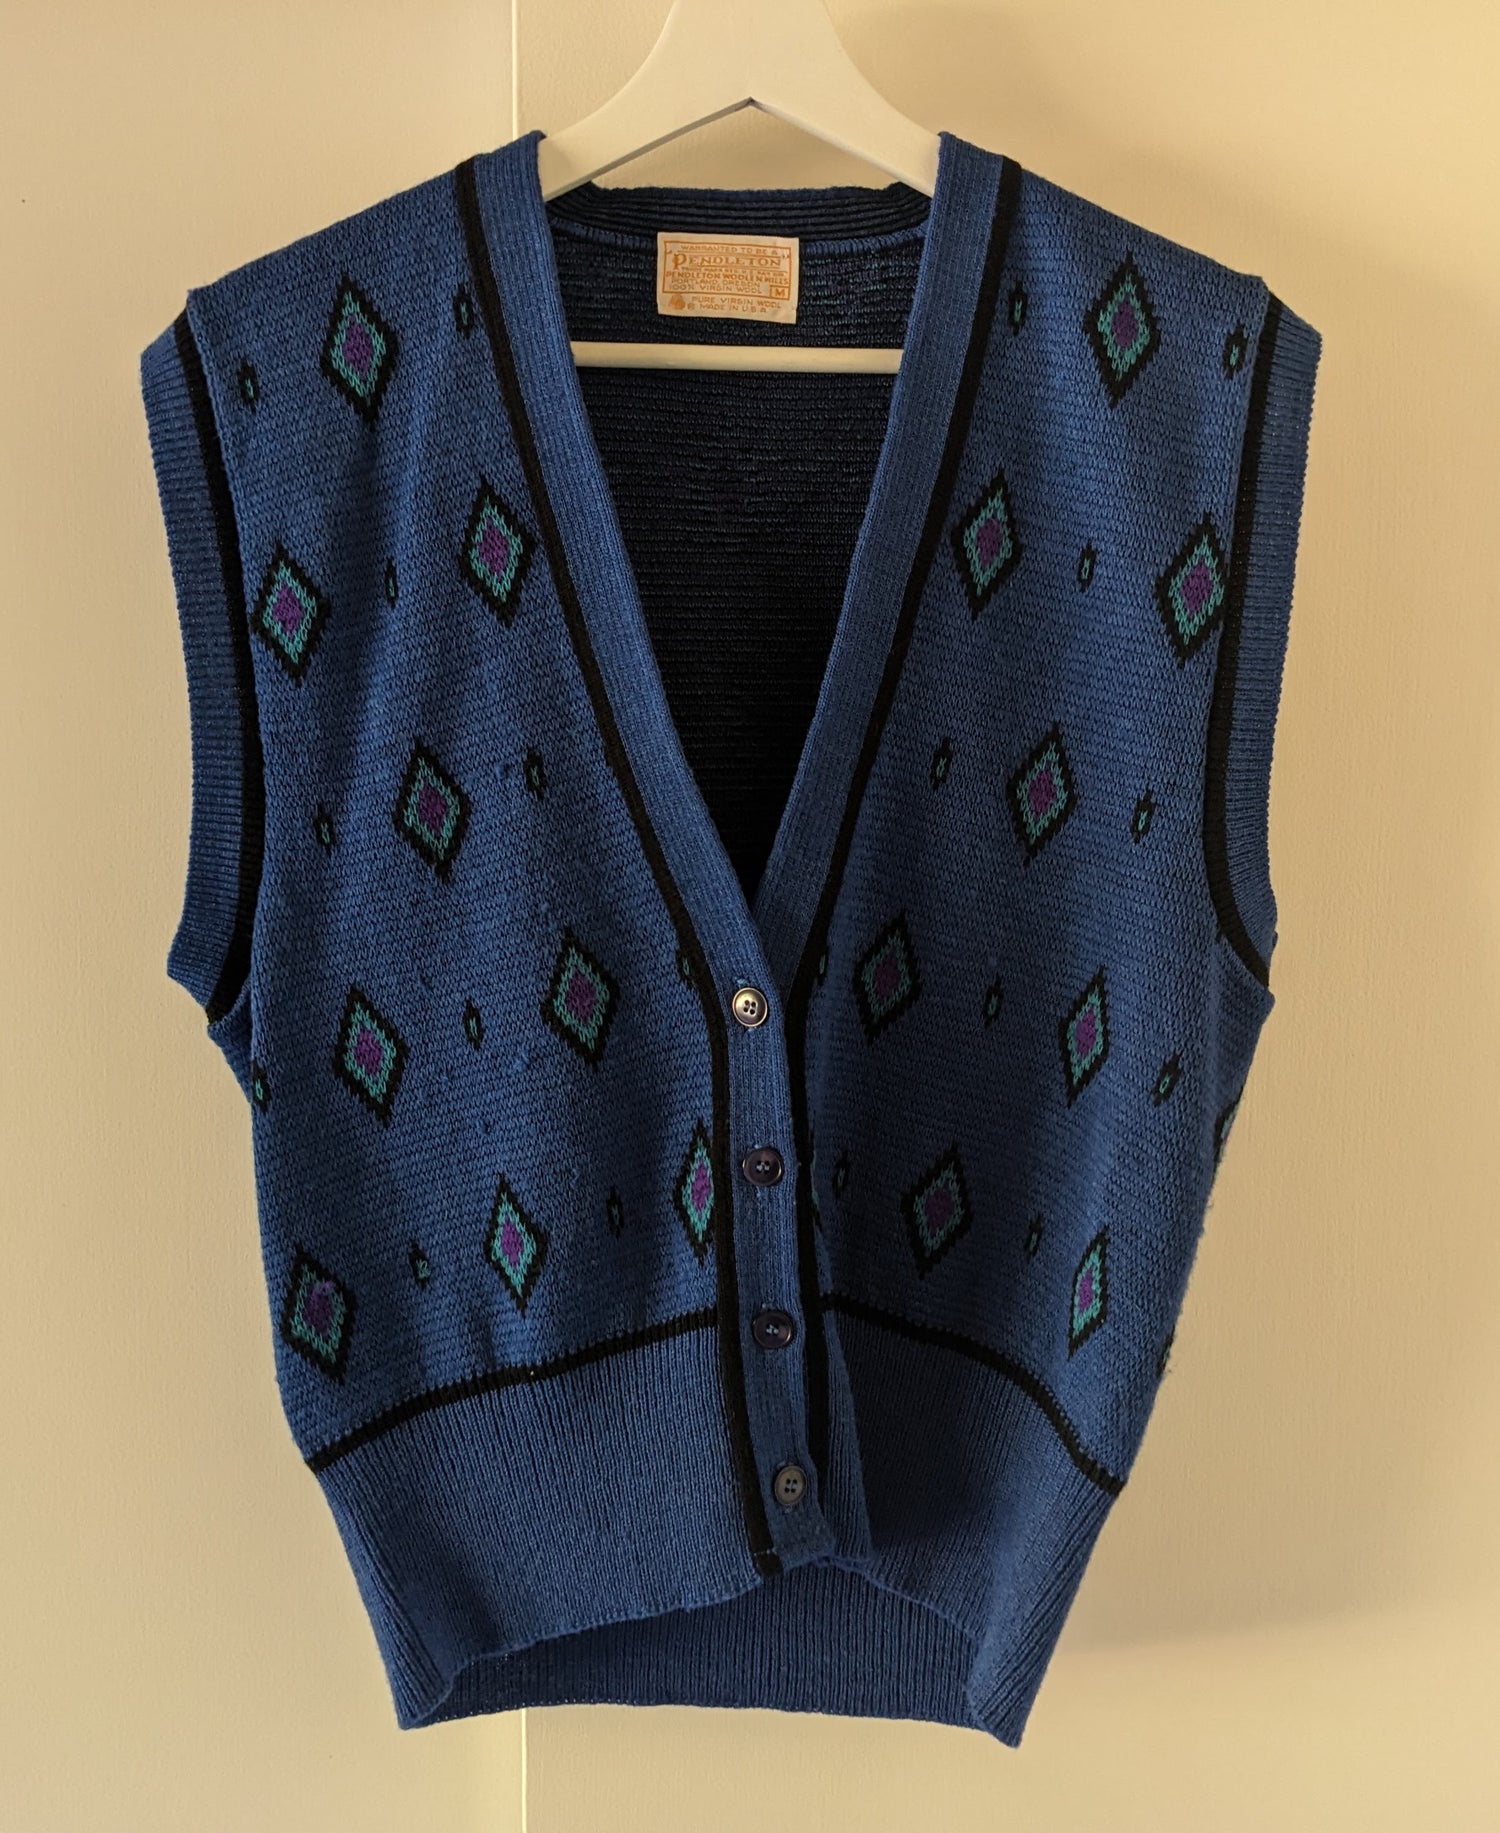 Pendleton Blue and purple diamonds retro vest